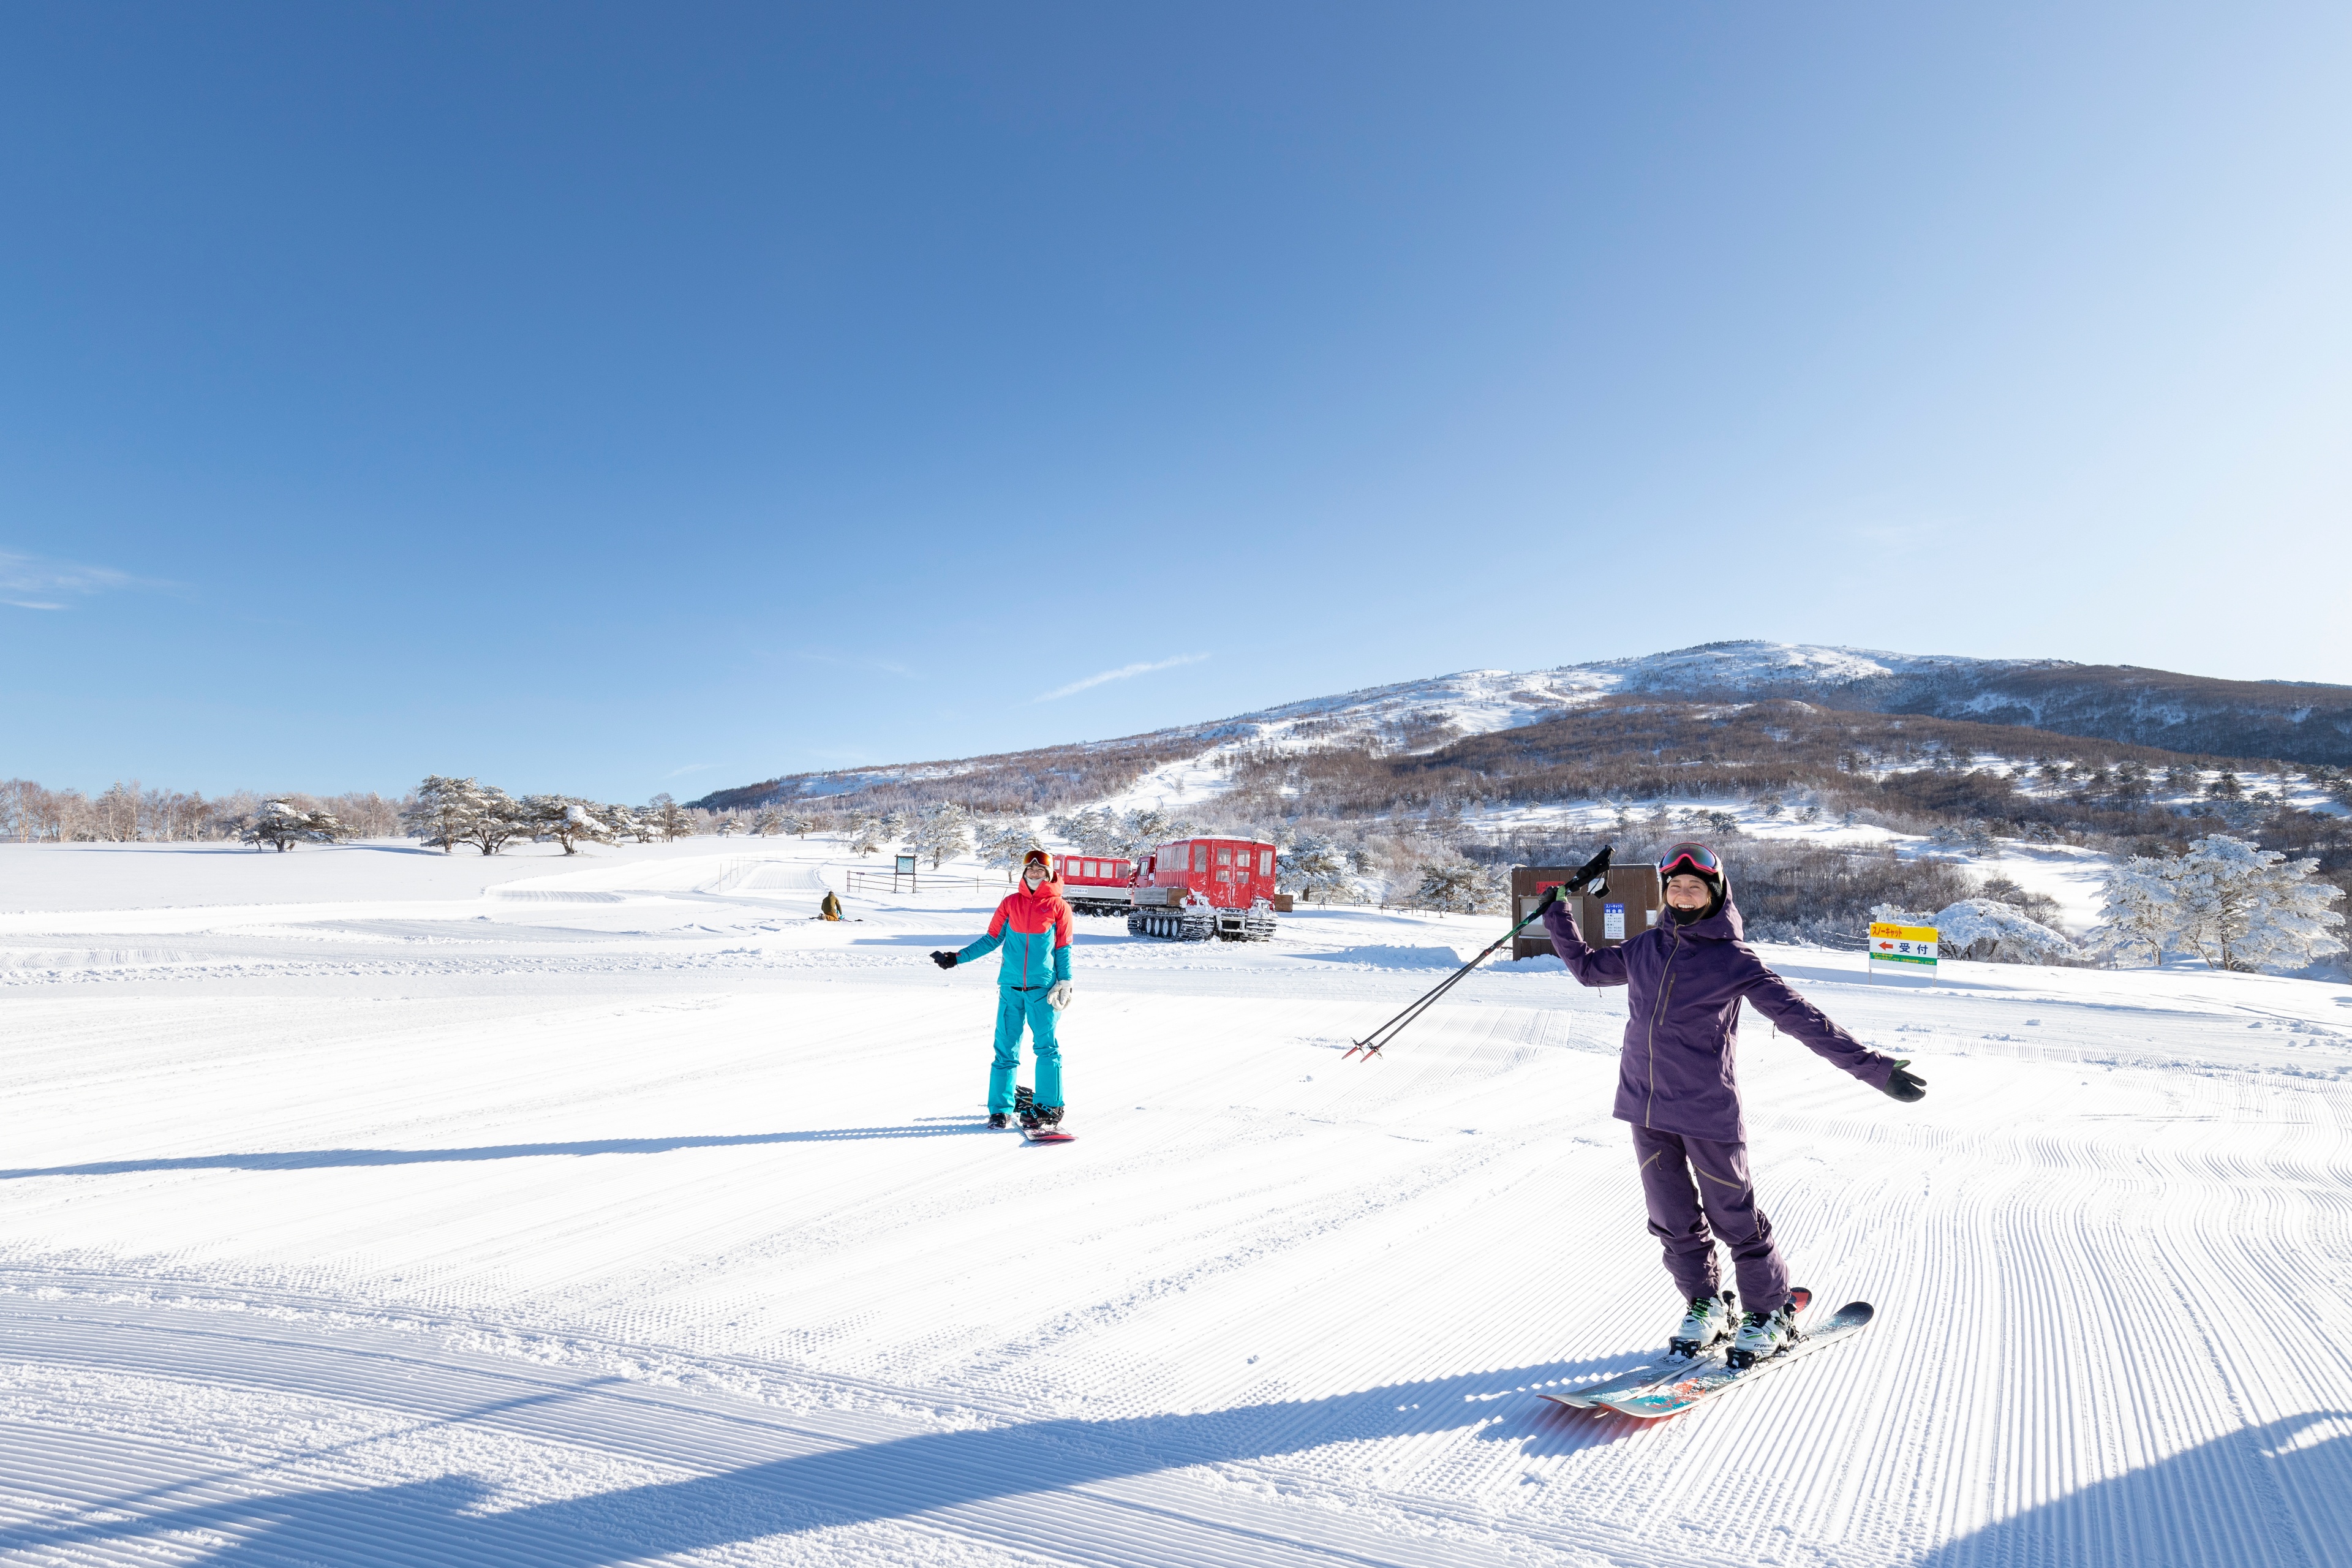 Sugadaira Kogen Snow Resort Nagano E-Voucher for Ski Lift Ticket IC Card